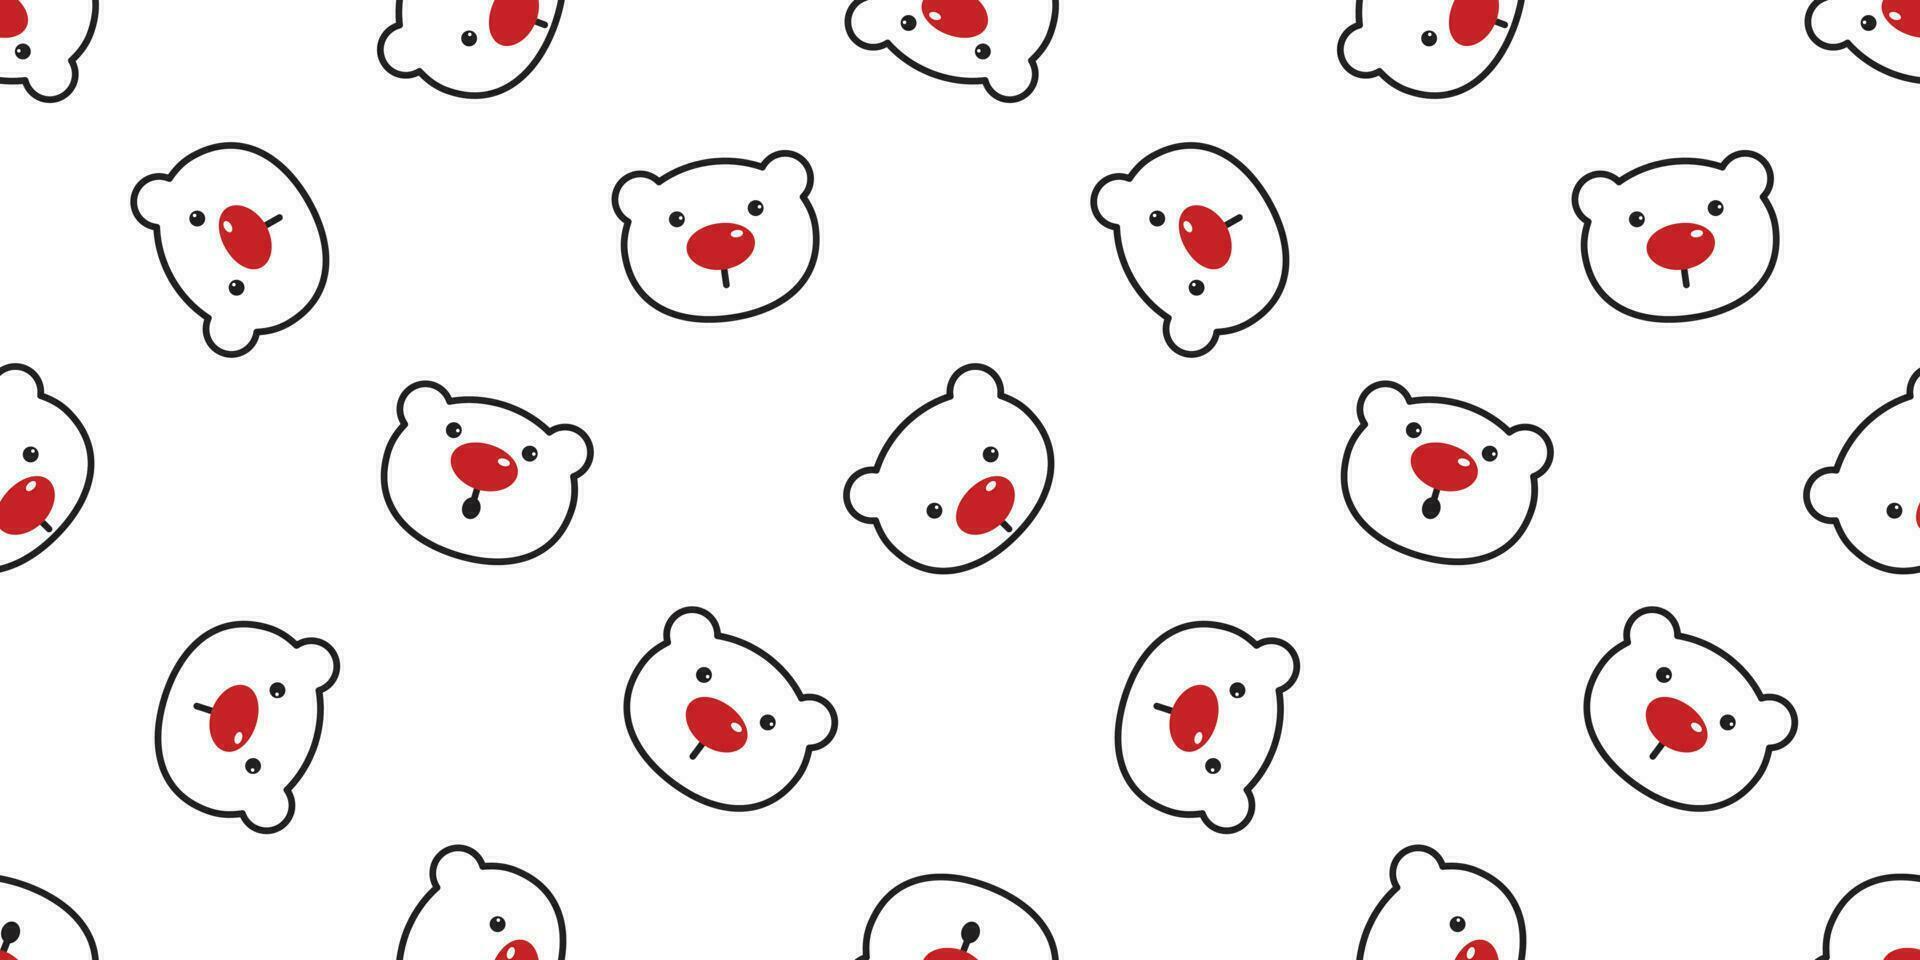 bear seamless pattern polar bear vector Christmas panda red nose teddy cartoon scarf isolated tile background repeat wallpaper illustration